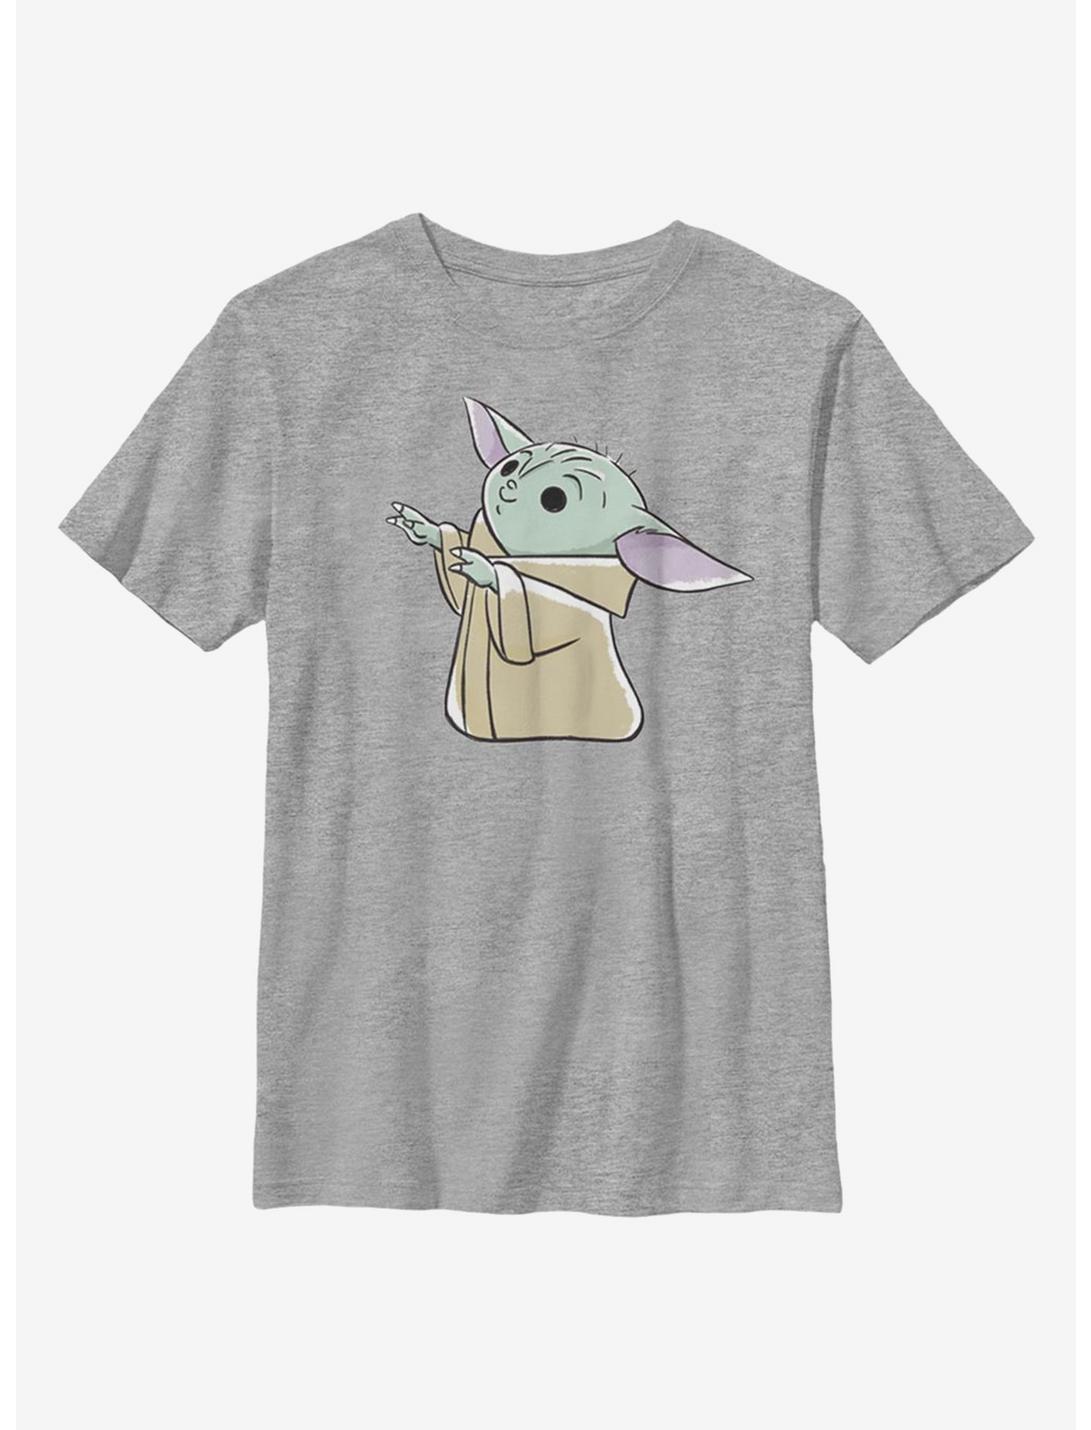 Star Wars The Mandalorian Yoda Reaching Youth T-Shirt, ATH HTR, hi-res